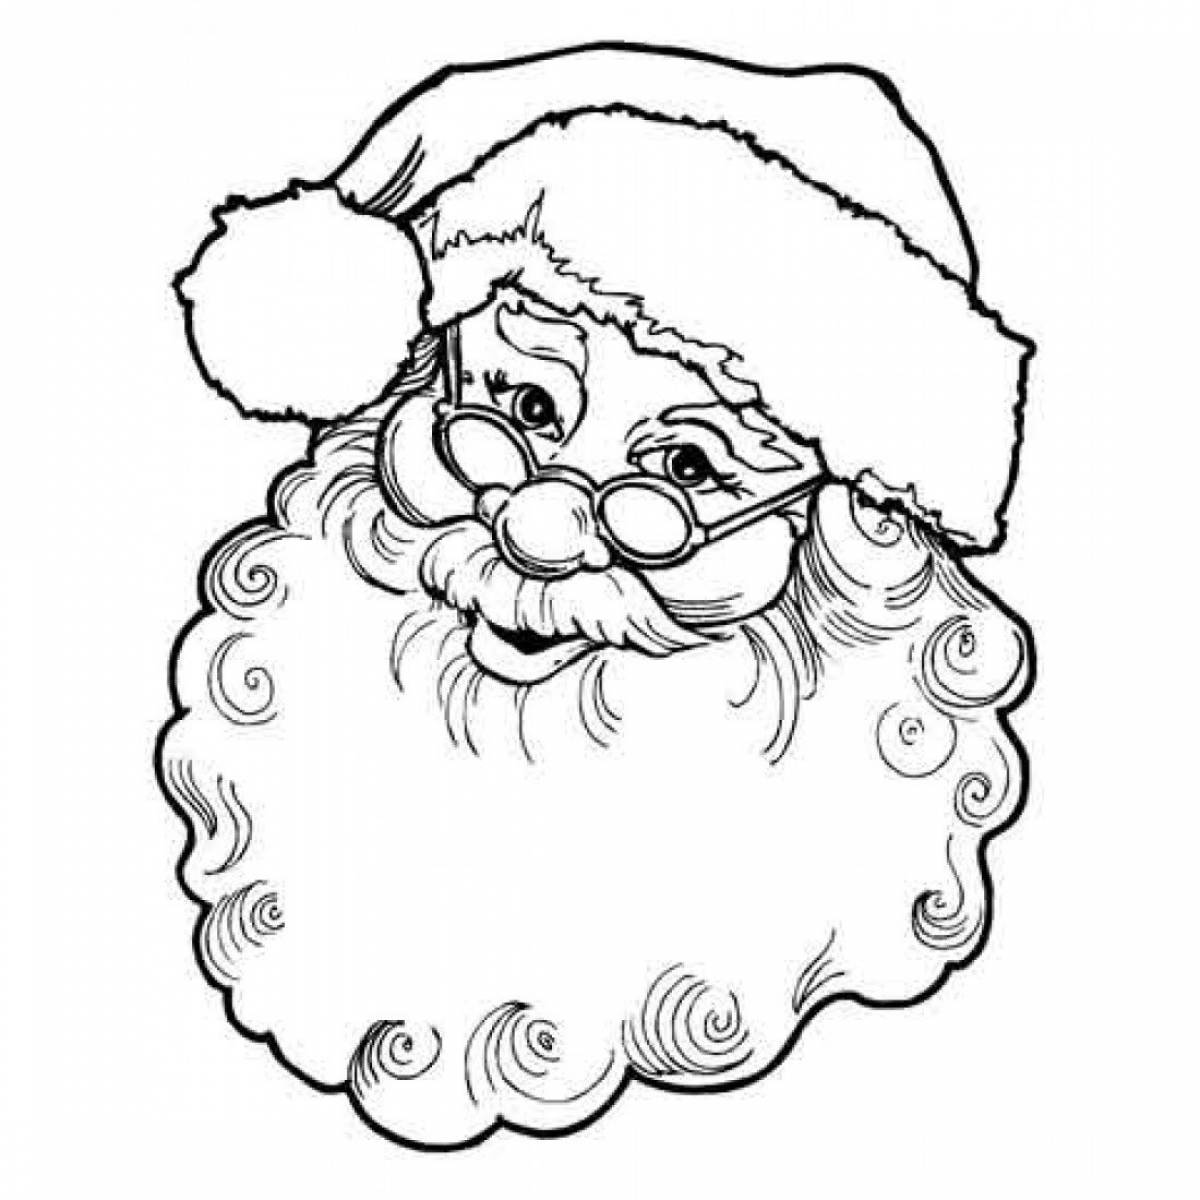 Rampant Santa Claus coloring page